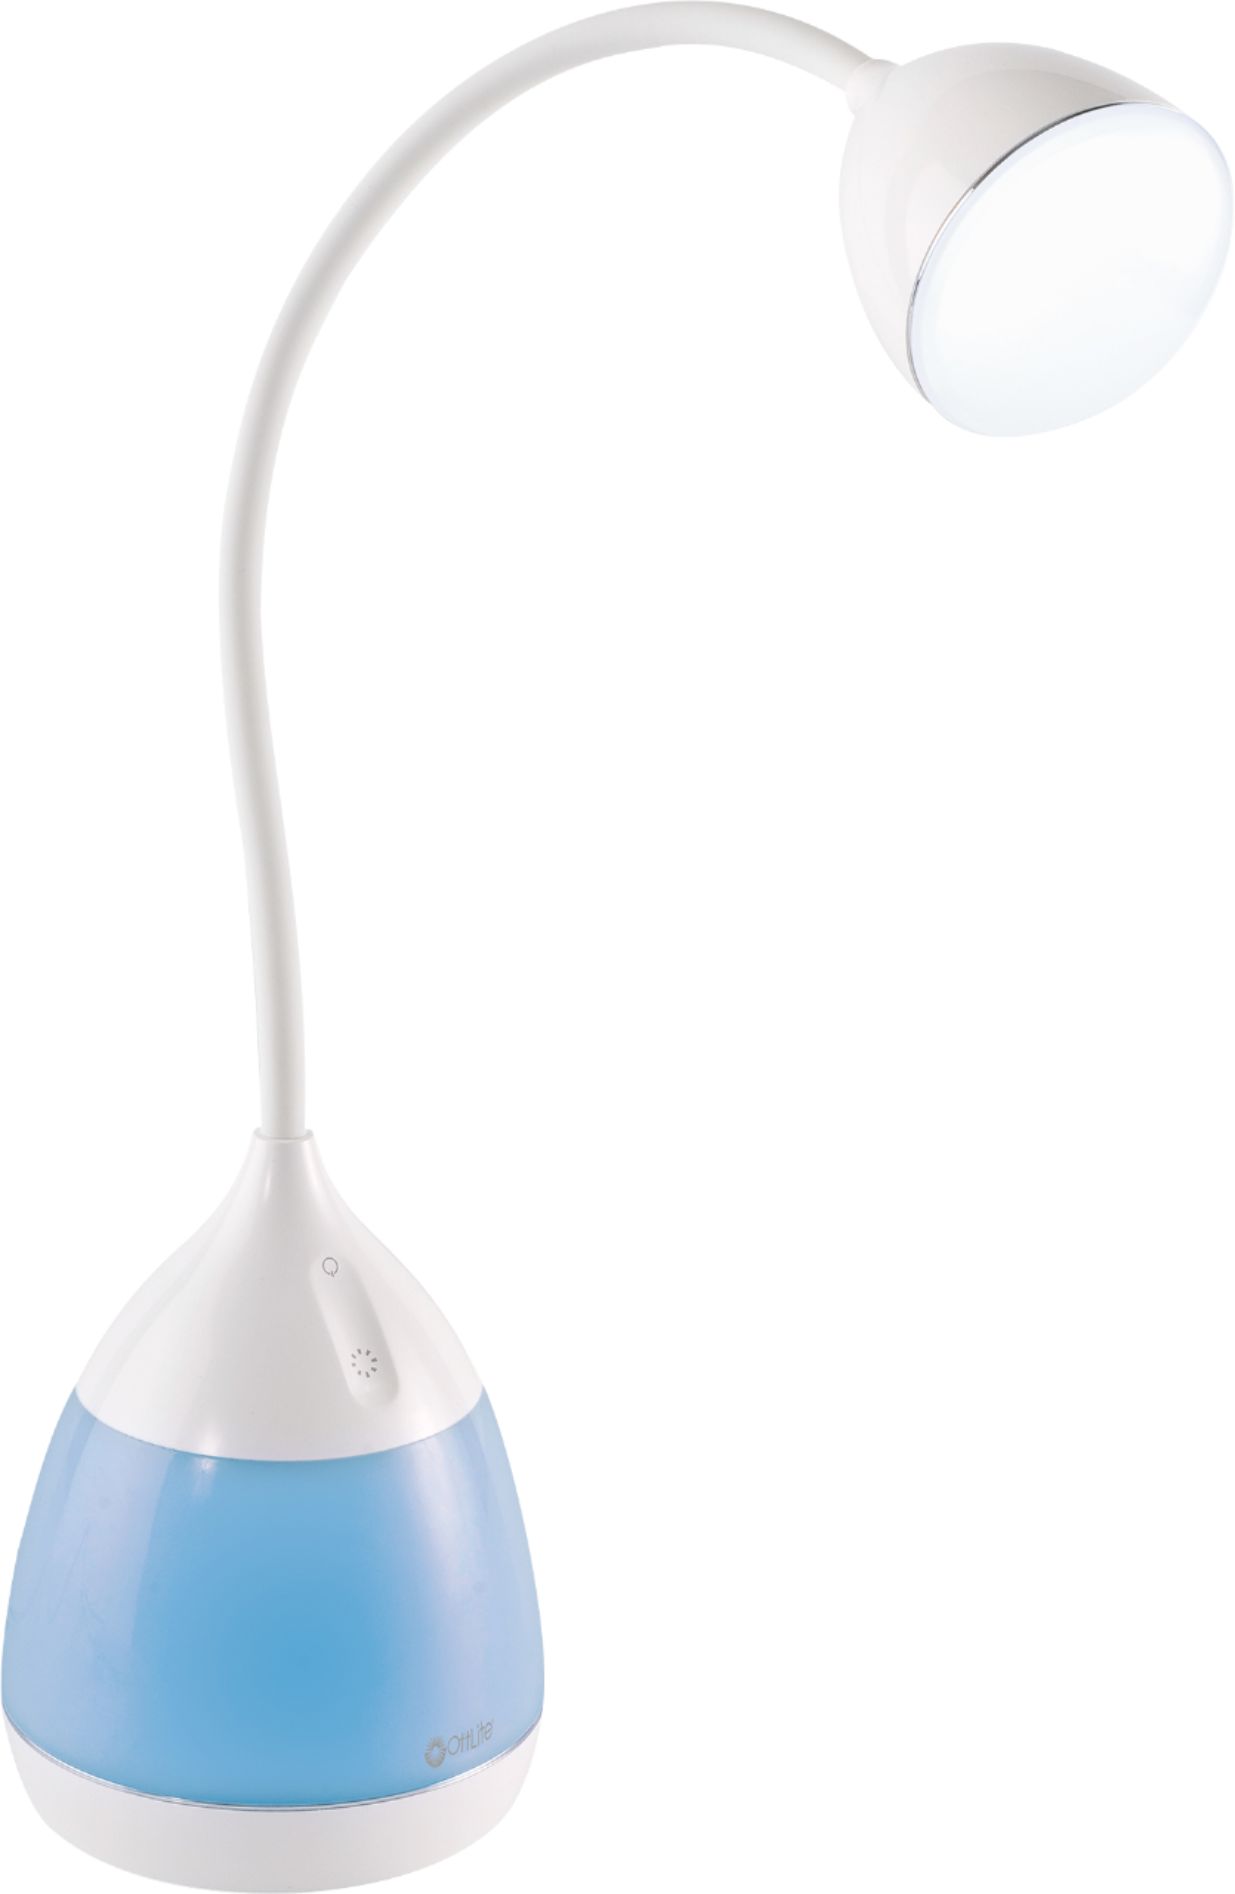 Portable Mushroom Lamp (Includes LED Light Bulb) Green - Room Essentials™